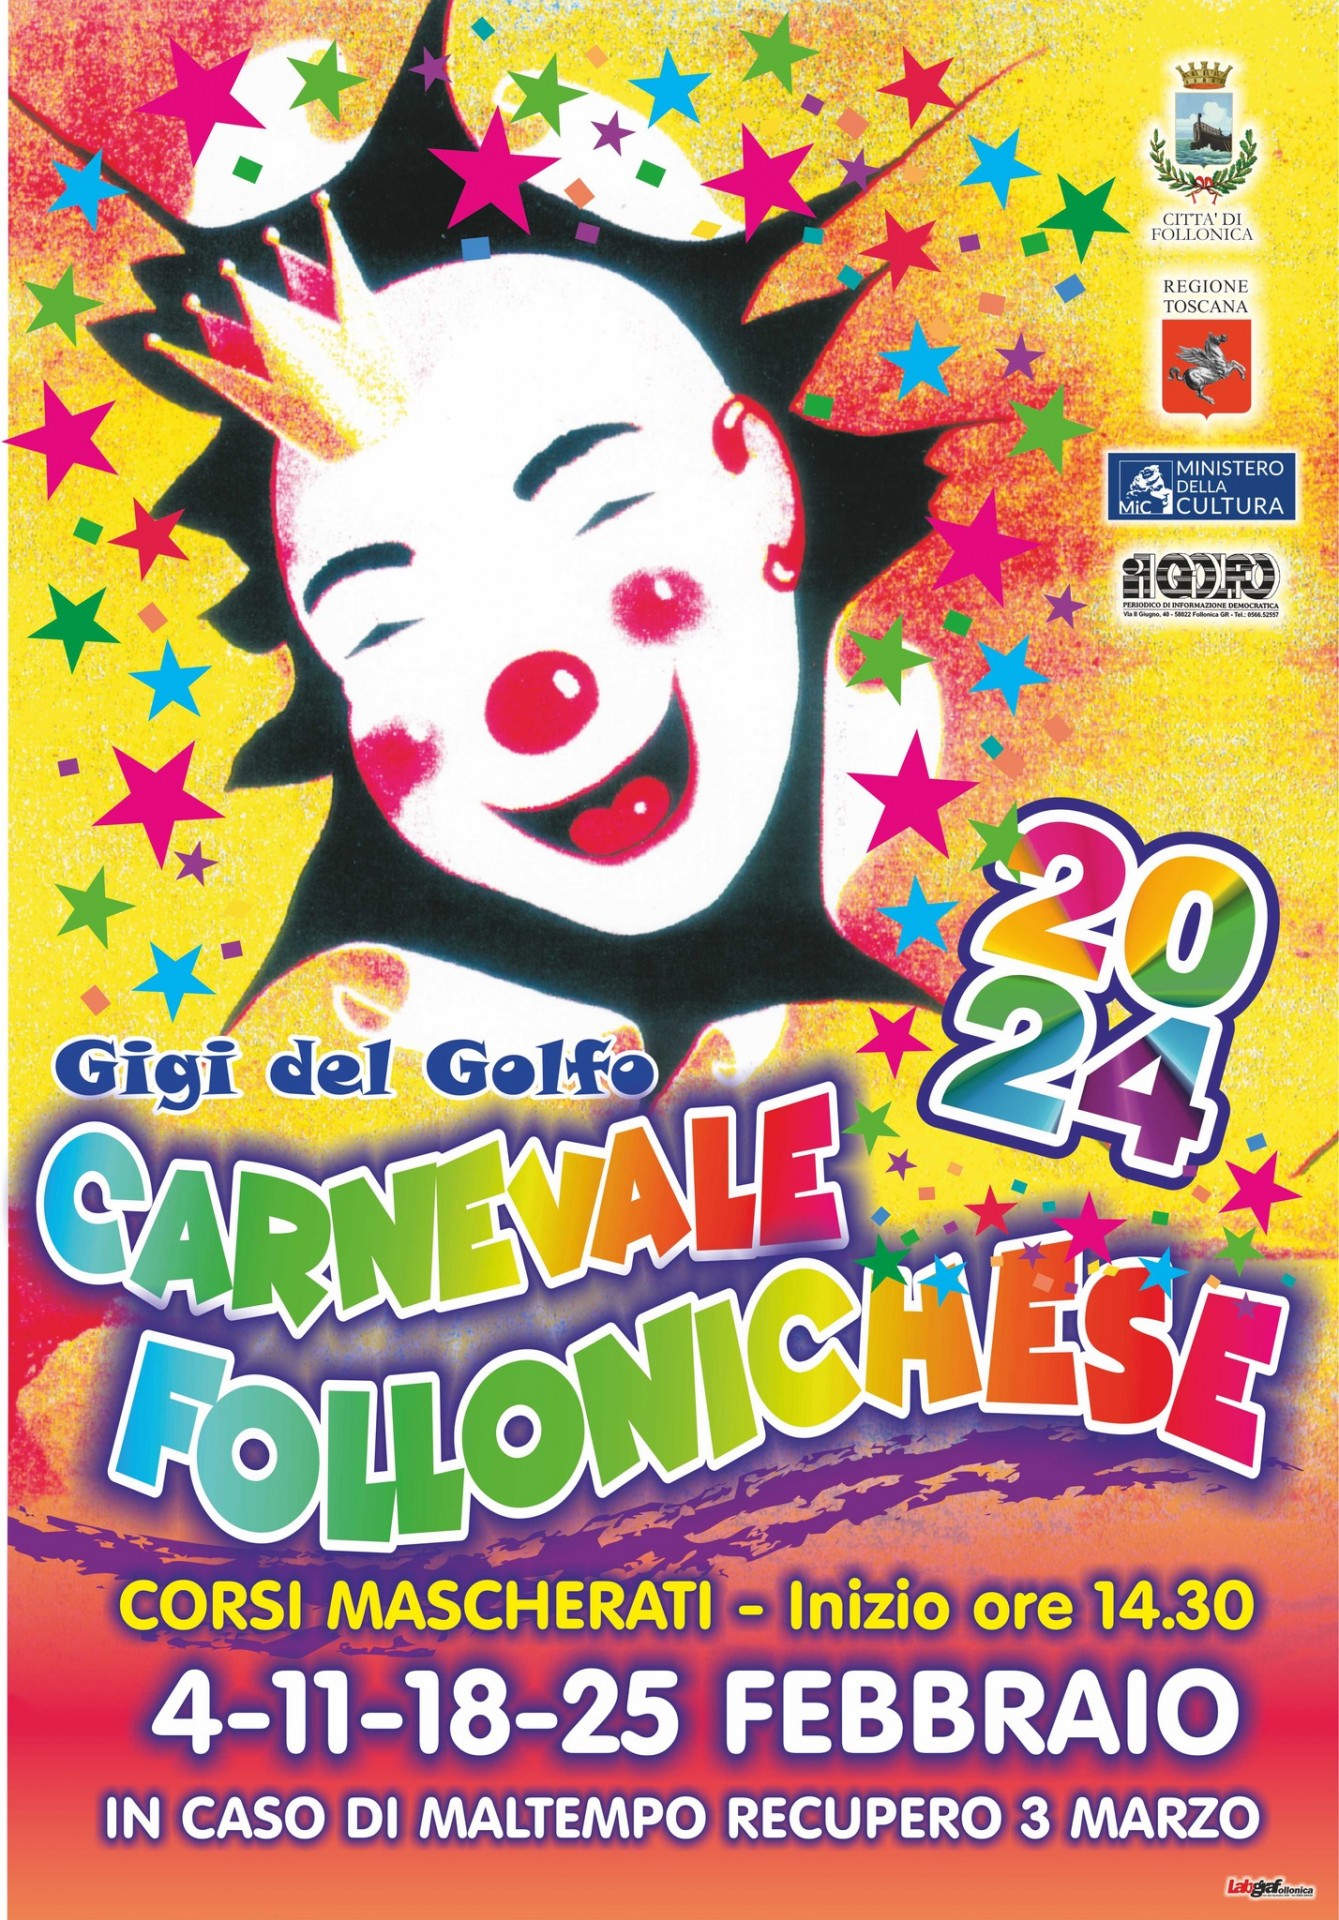 Locandina Carnevale Follonichese a Follonica